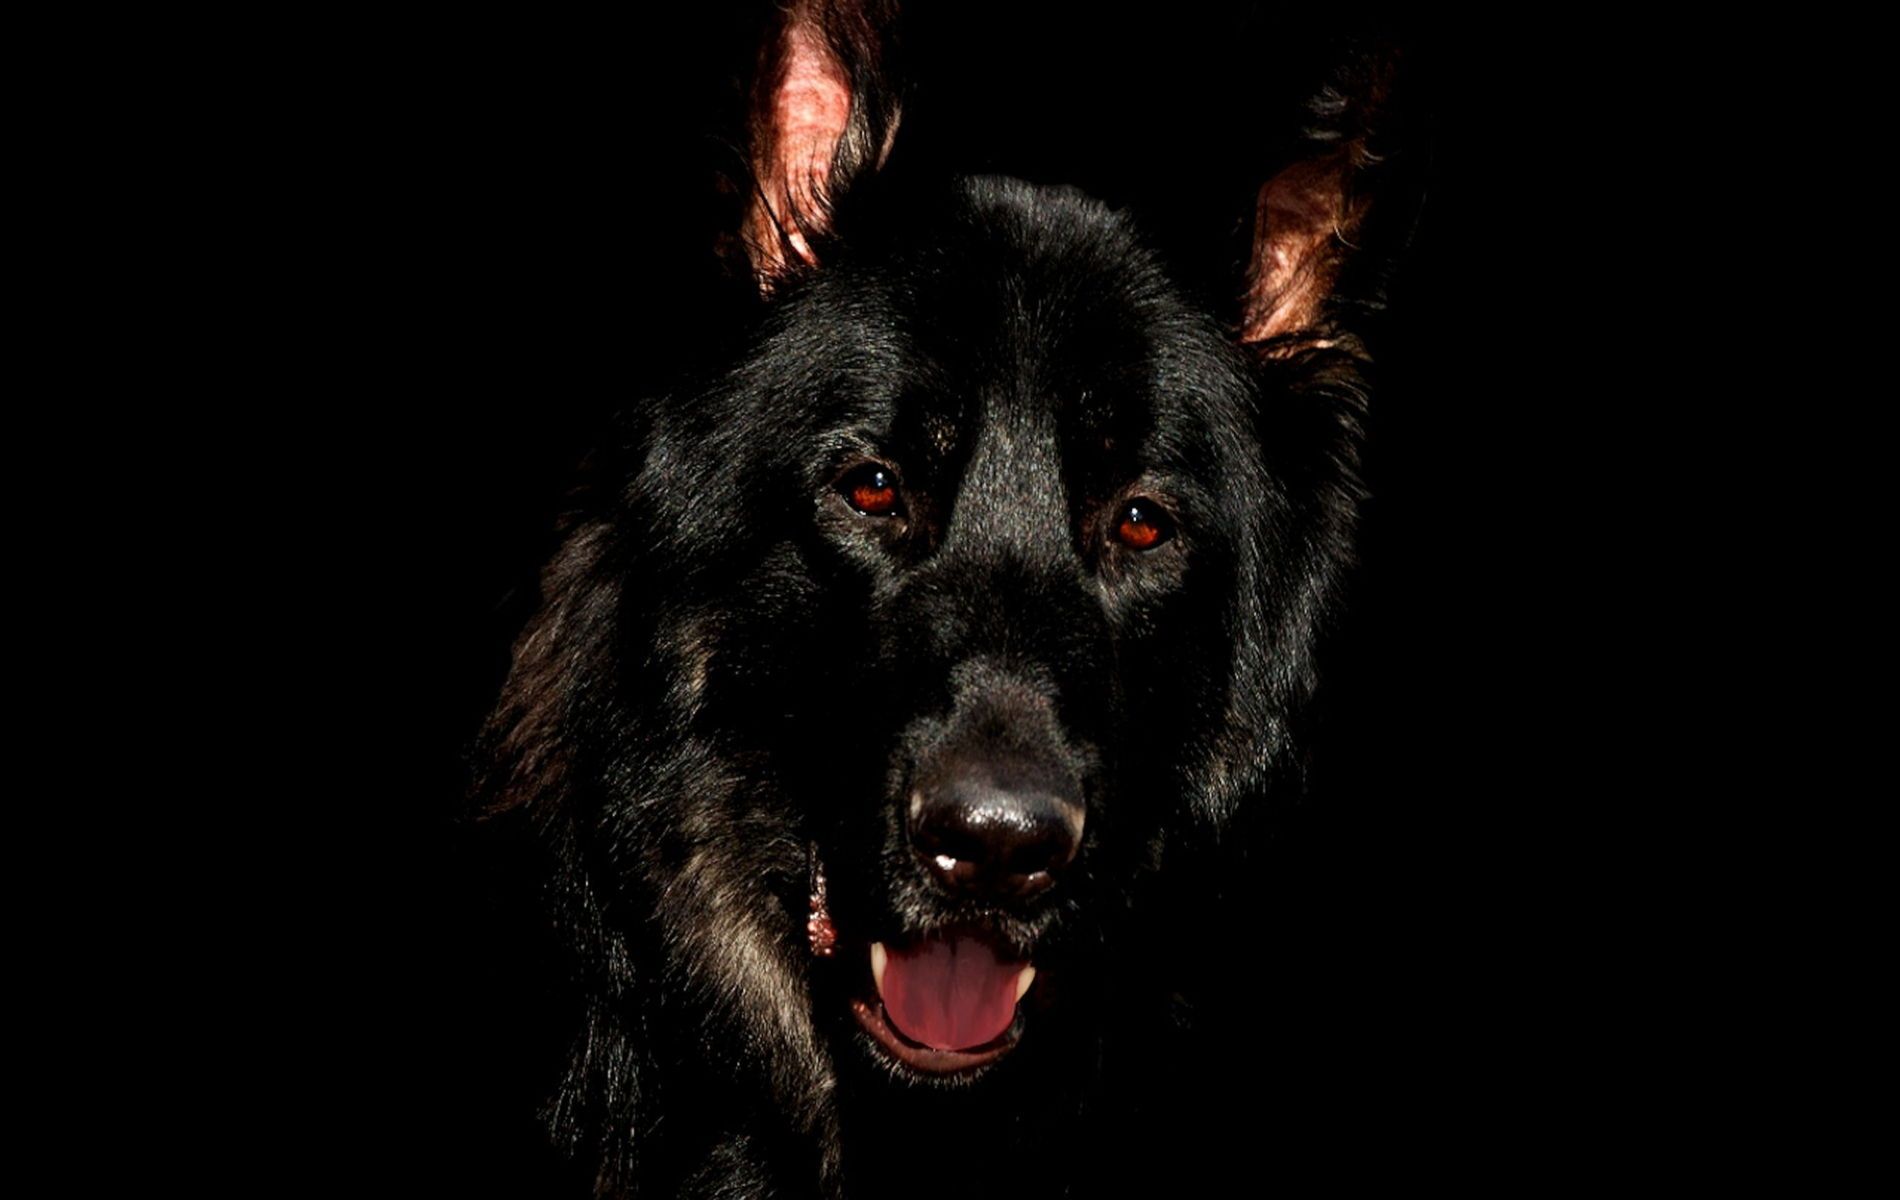 Black German Shepherd Picture